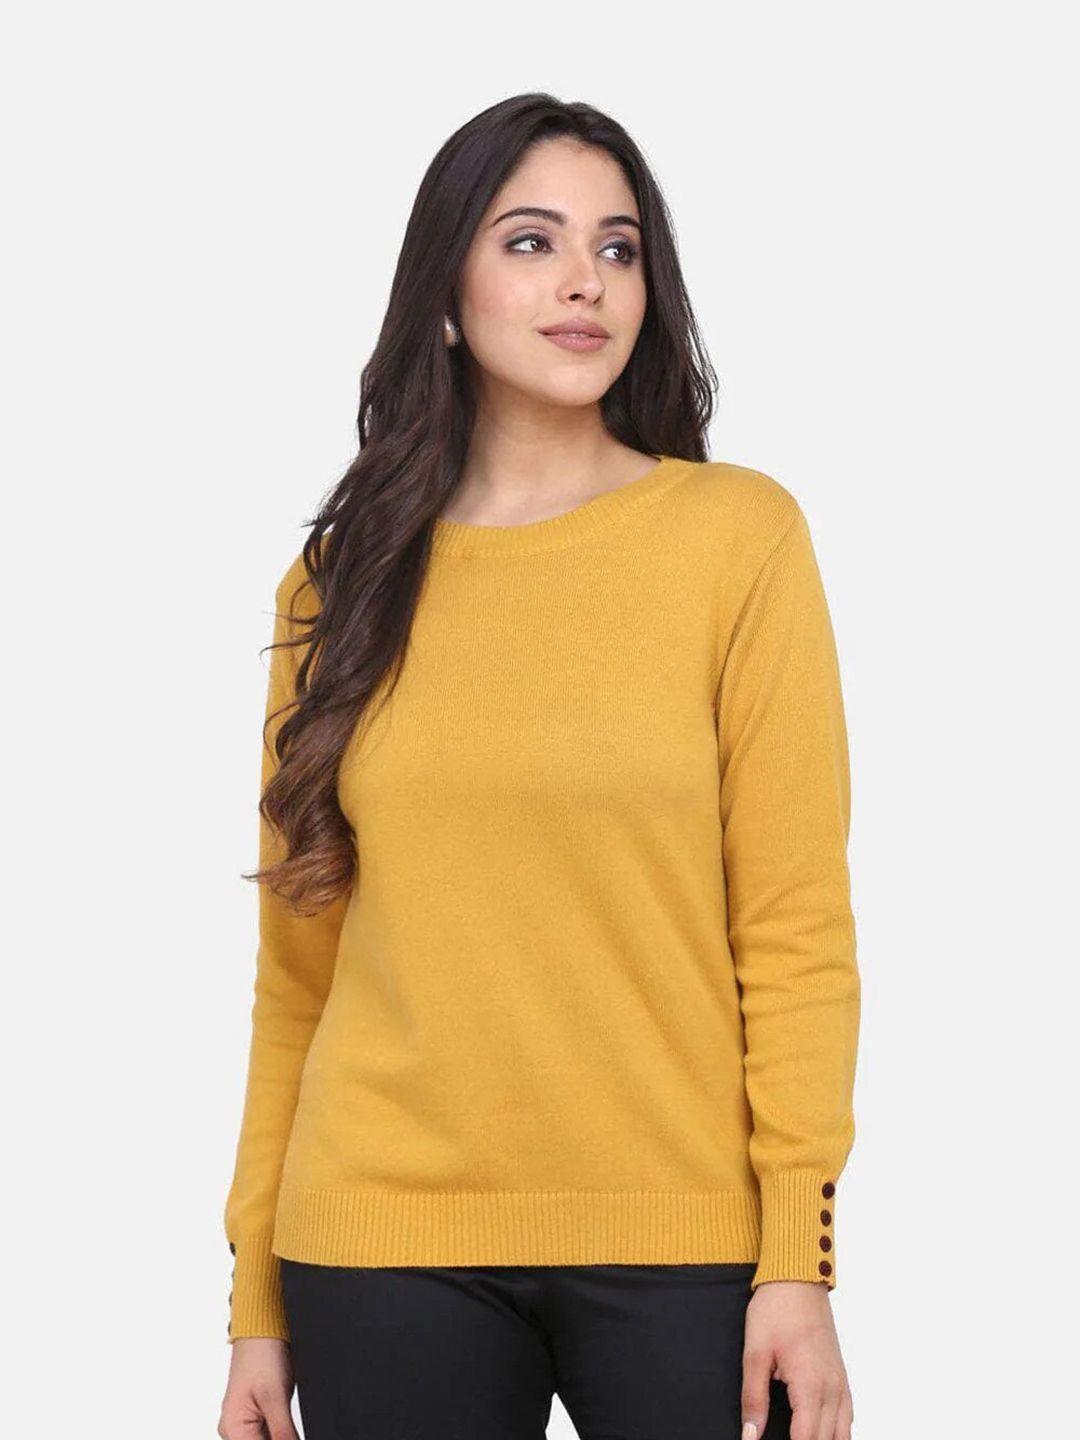 powersutra-women-yellow-solid-sweater